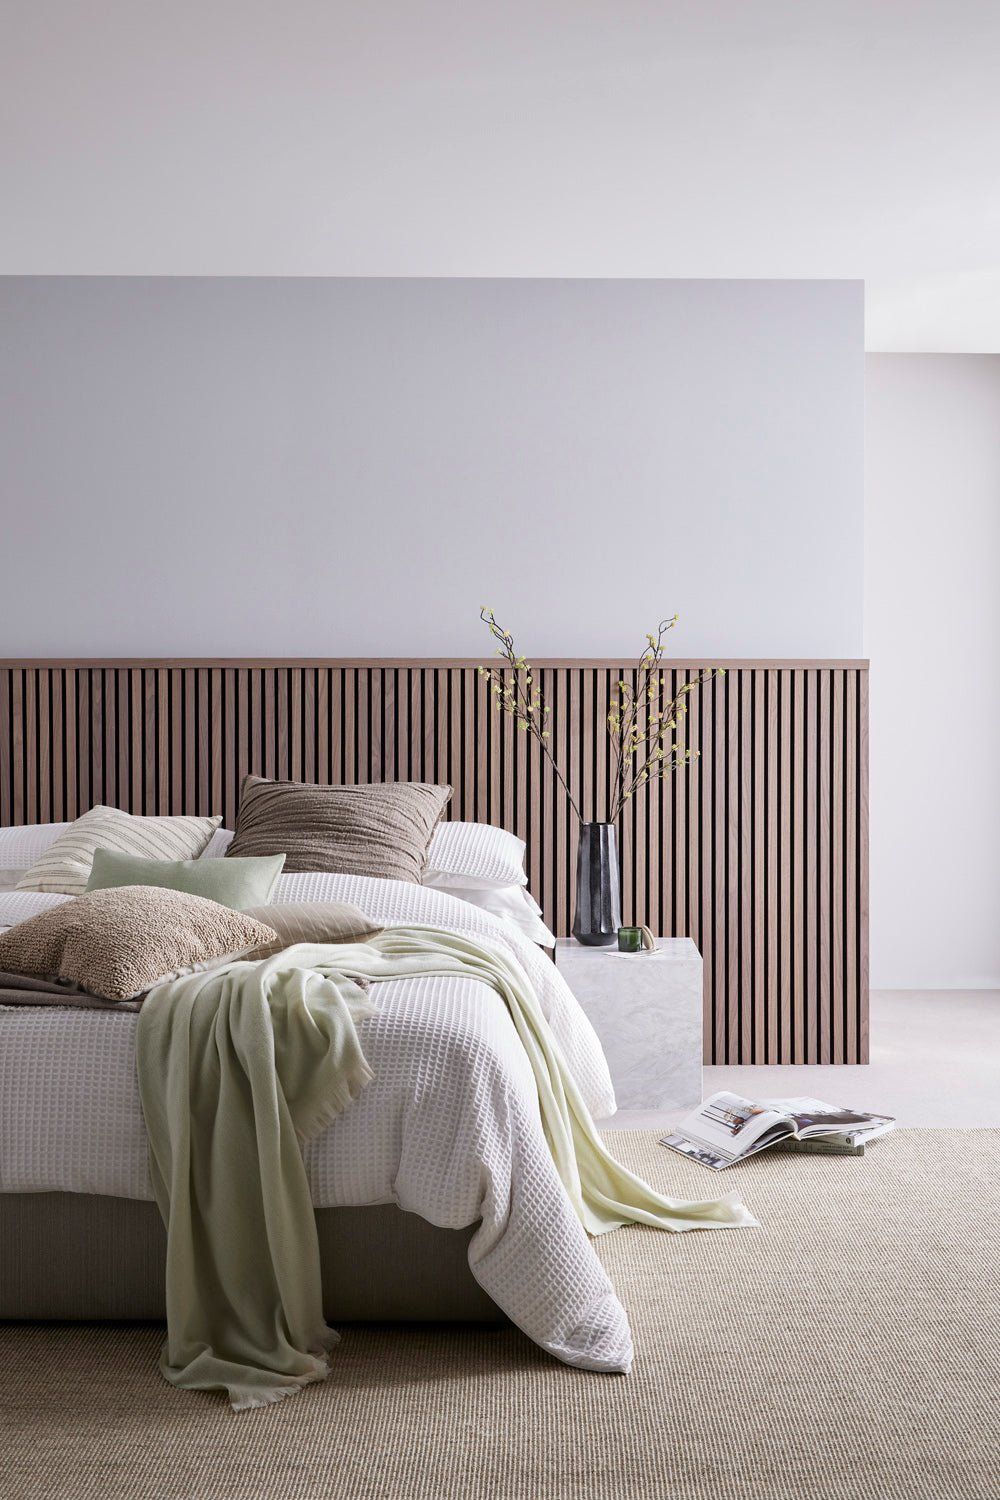 Bedroom Designs With Dark Wall Sleek and modern dark wall bedroom designs for a cozy atmosphere